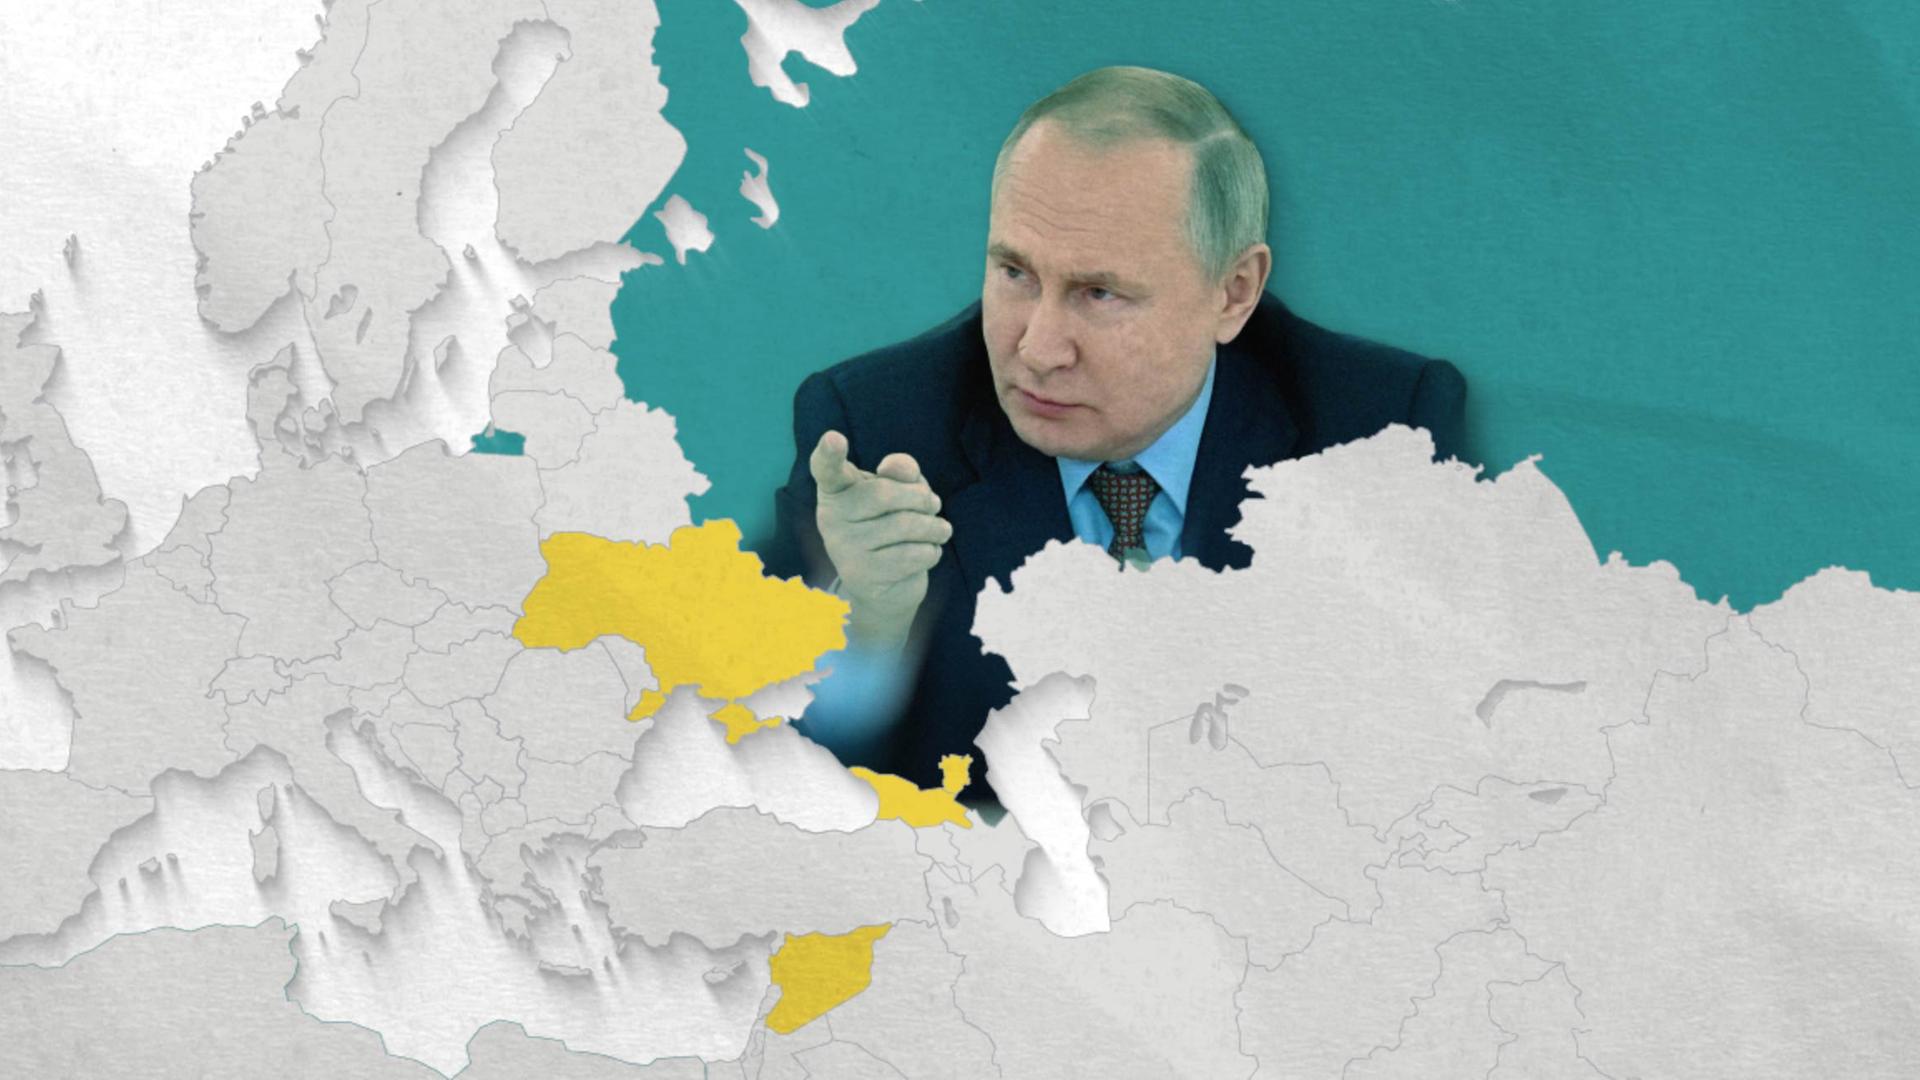 Putin on the map of Russia, Ukraine, Georgia and Syria